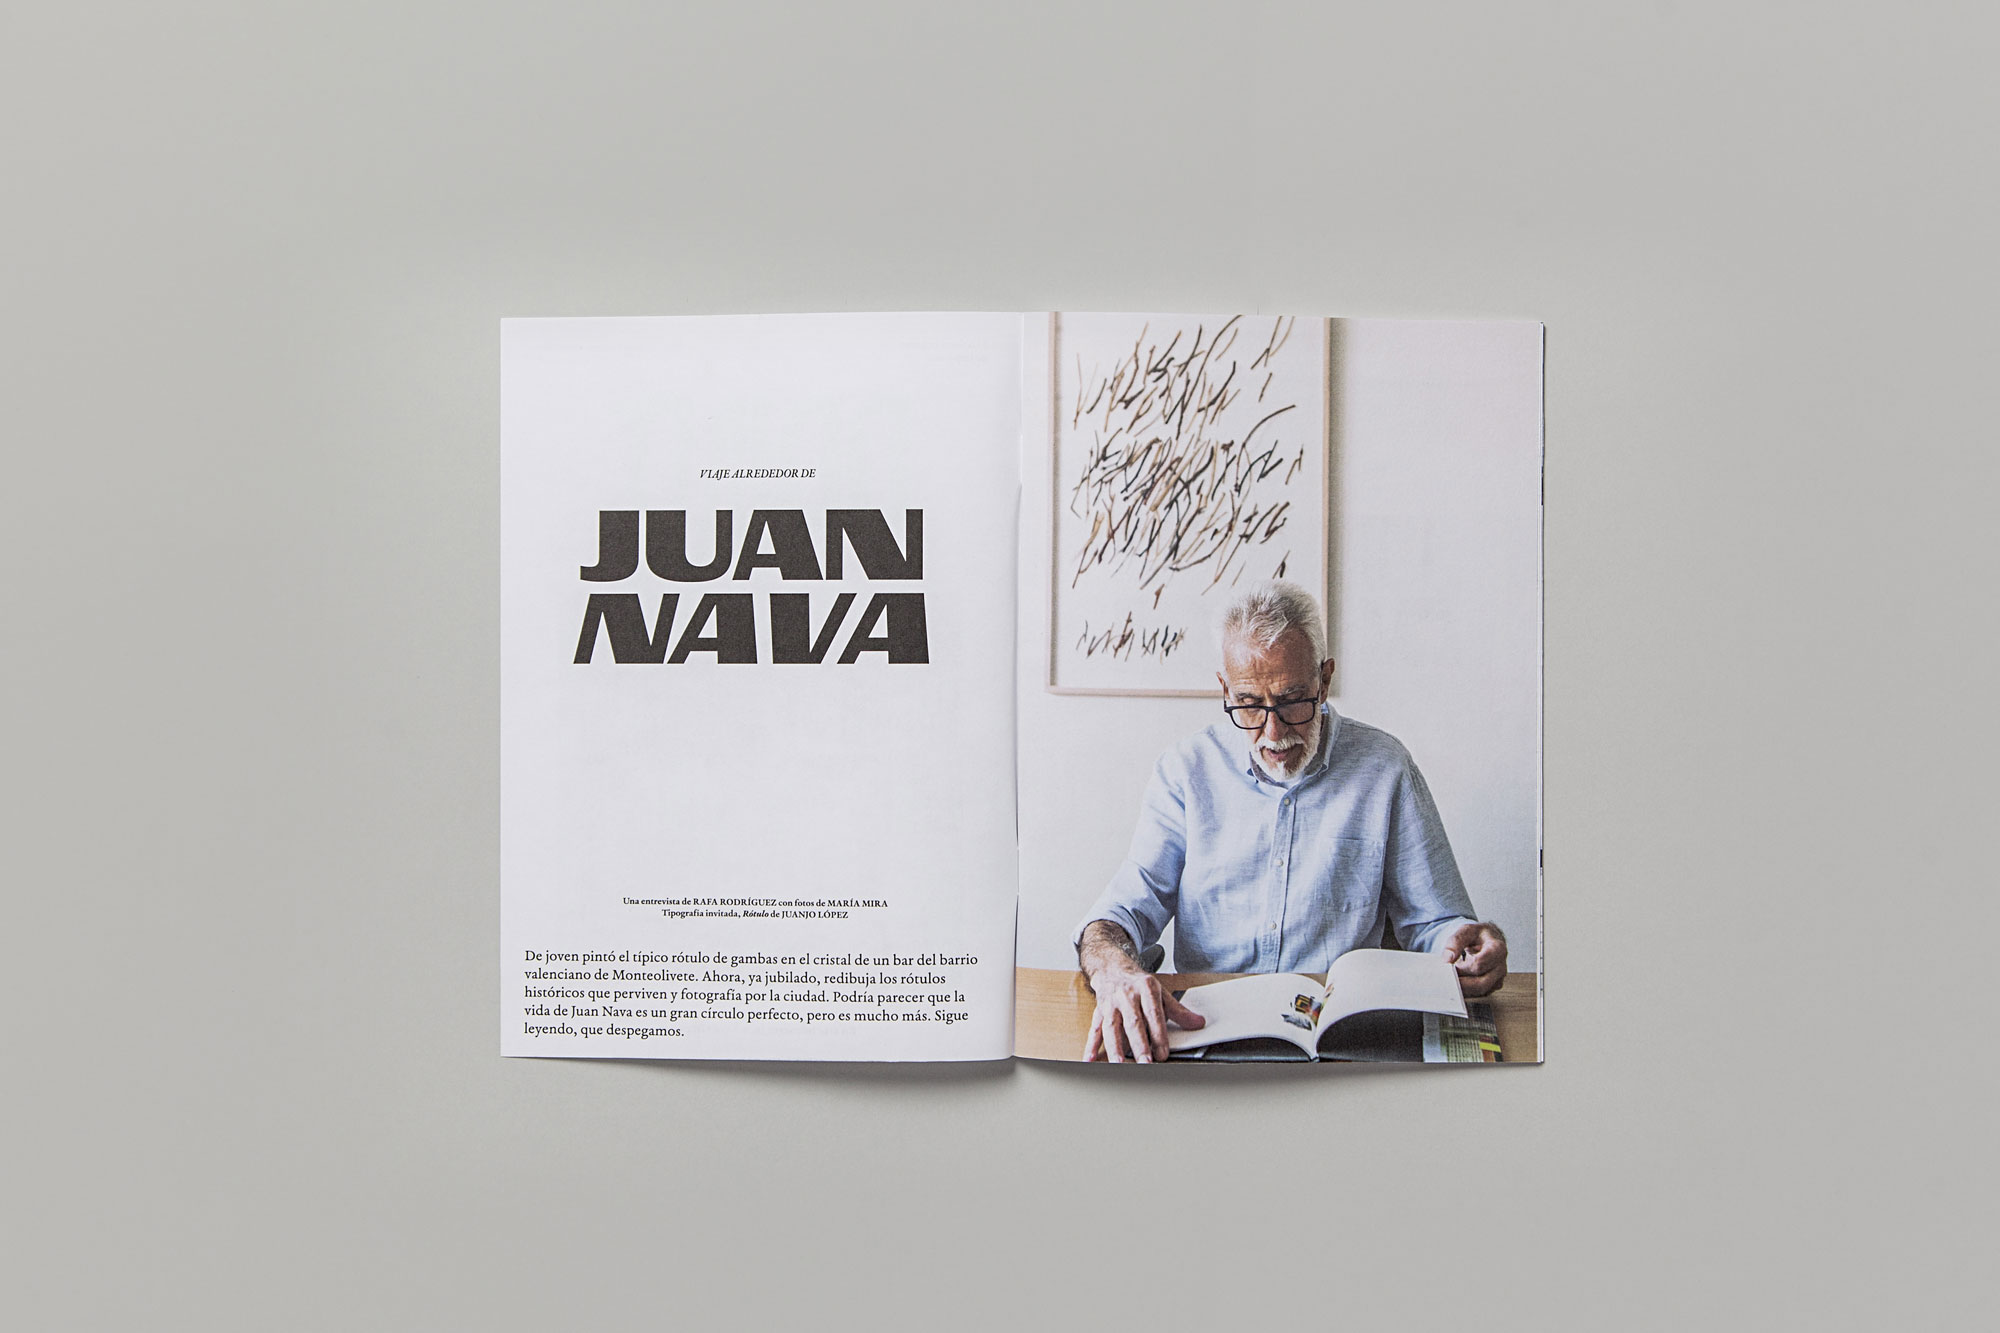 Print nº 16 con Juan Nava